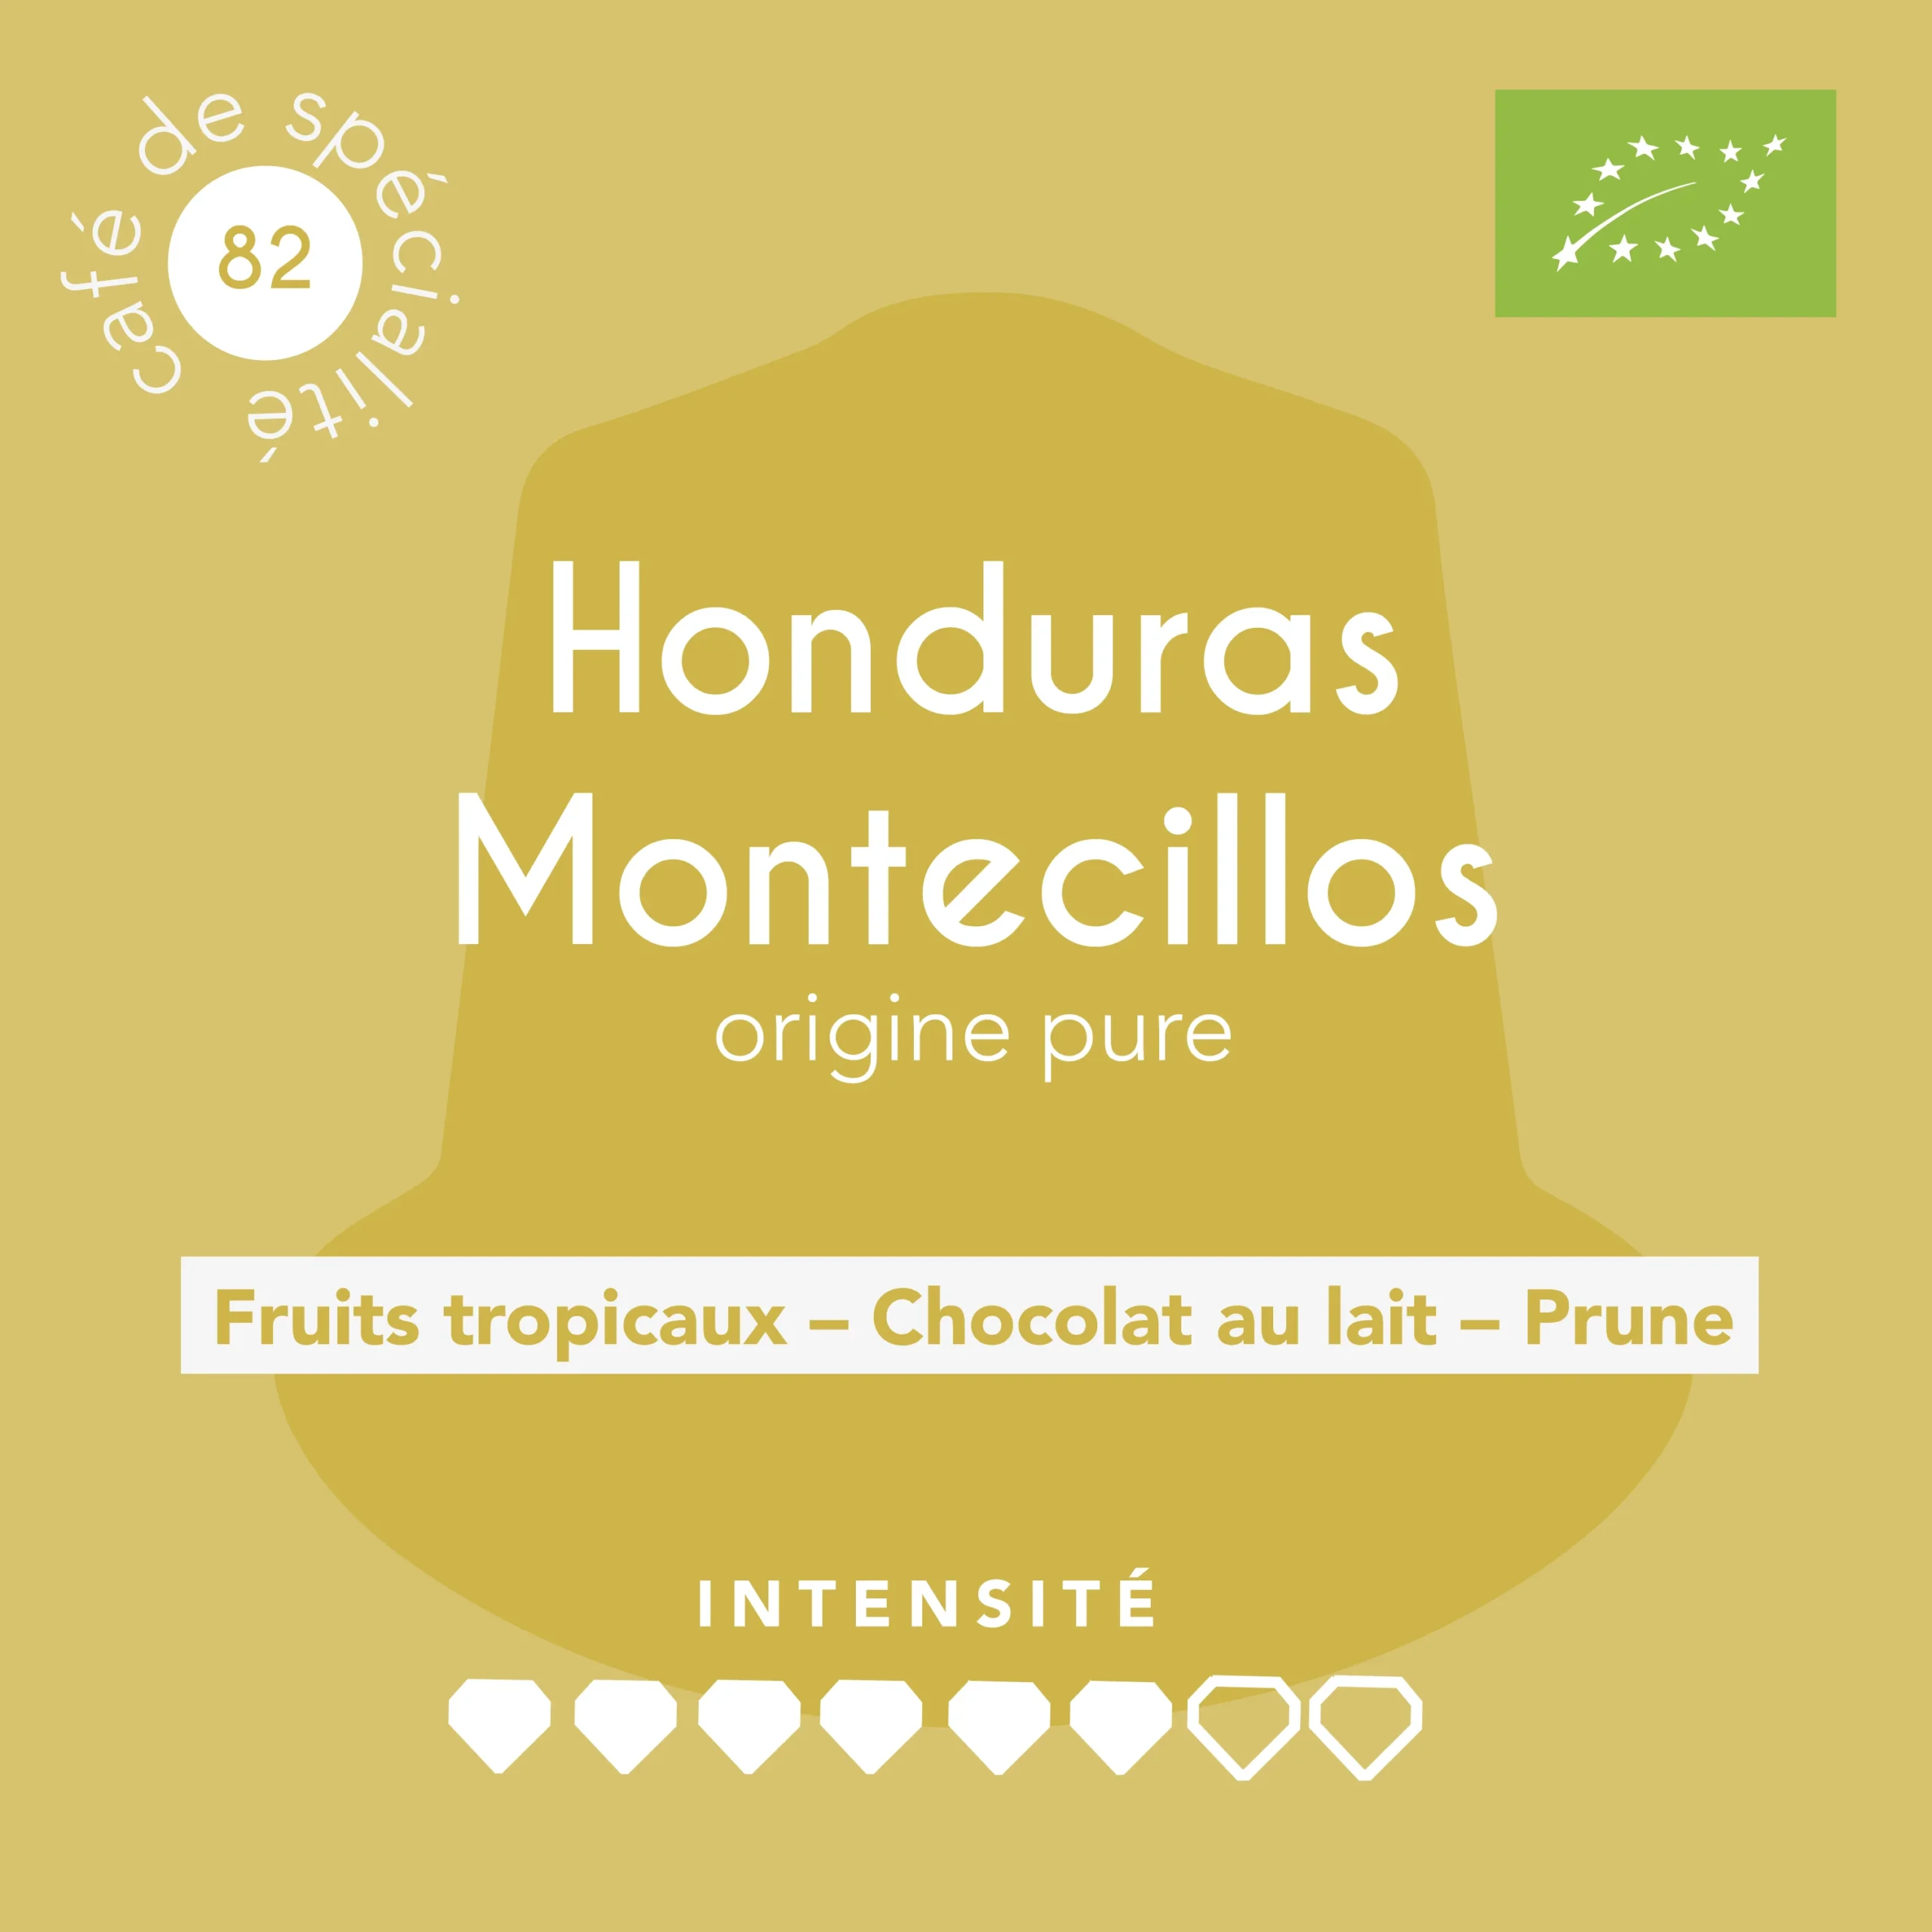 Capsule de café-Honduras Montecillos